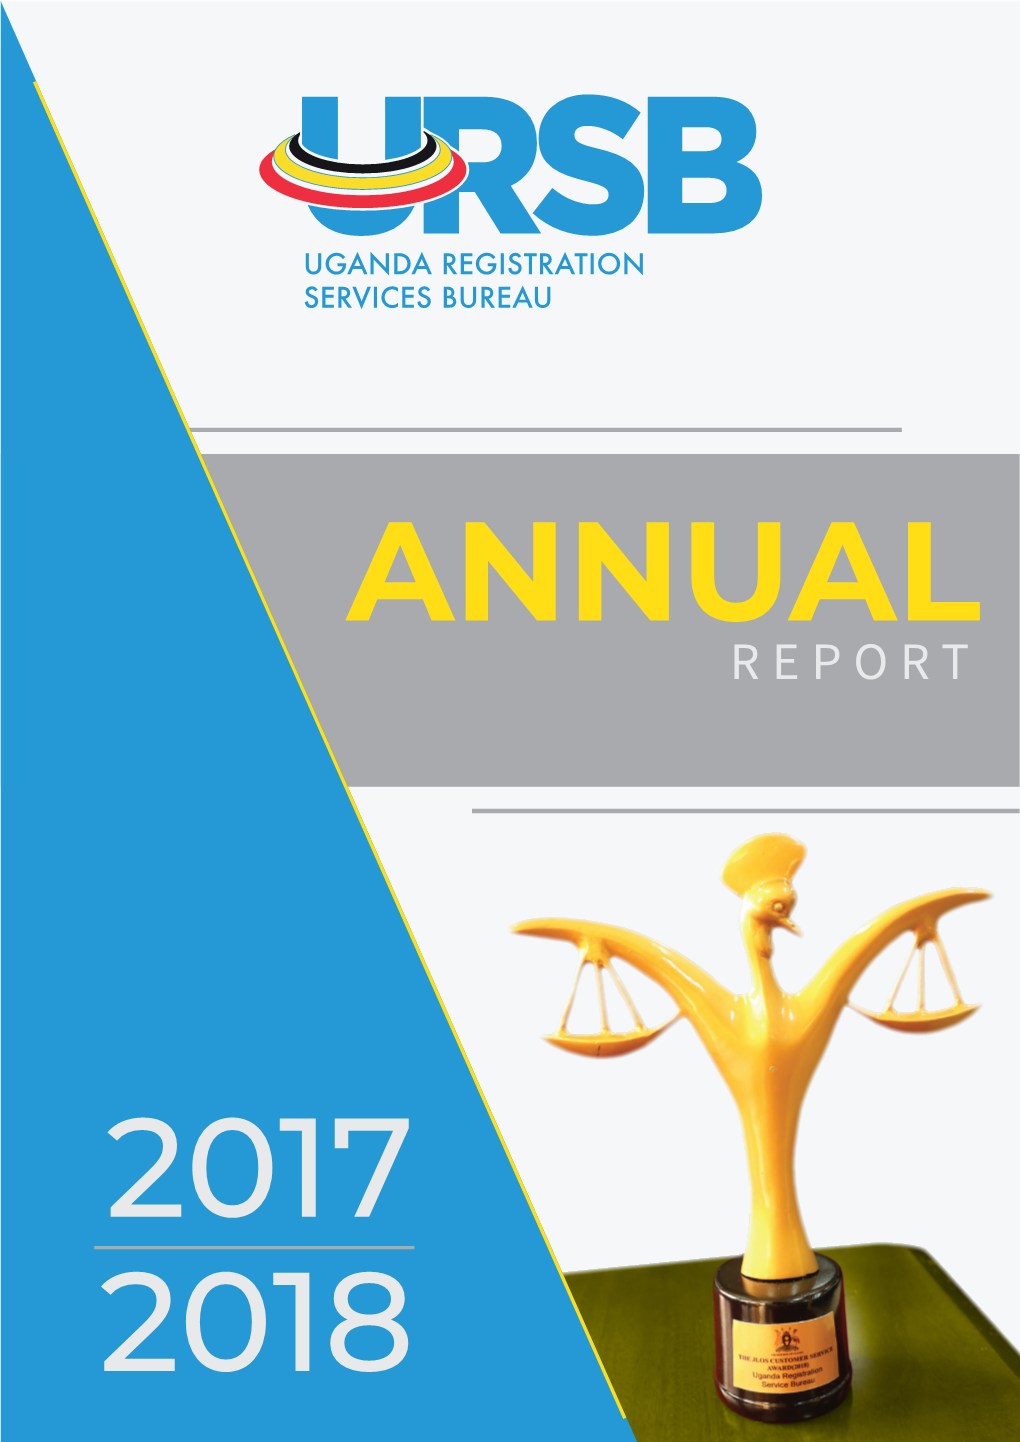 Ursb Annual Report 2017 - 2018 Corporate Governance Statement